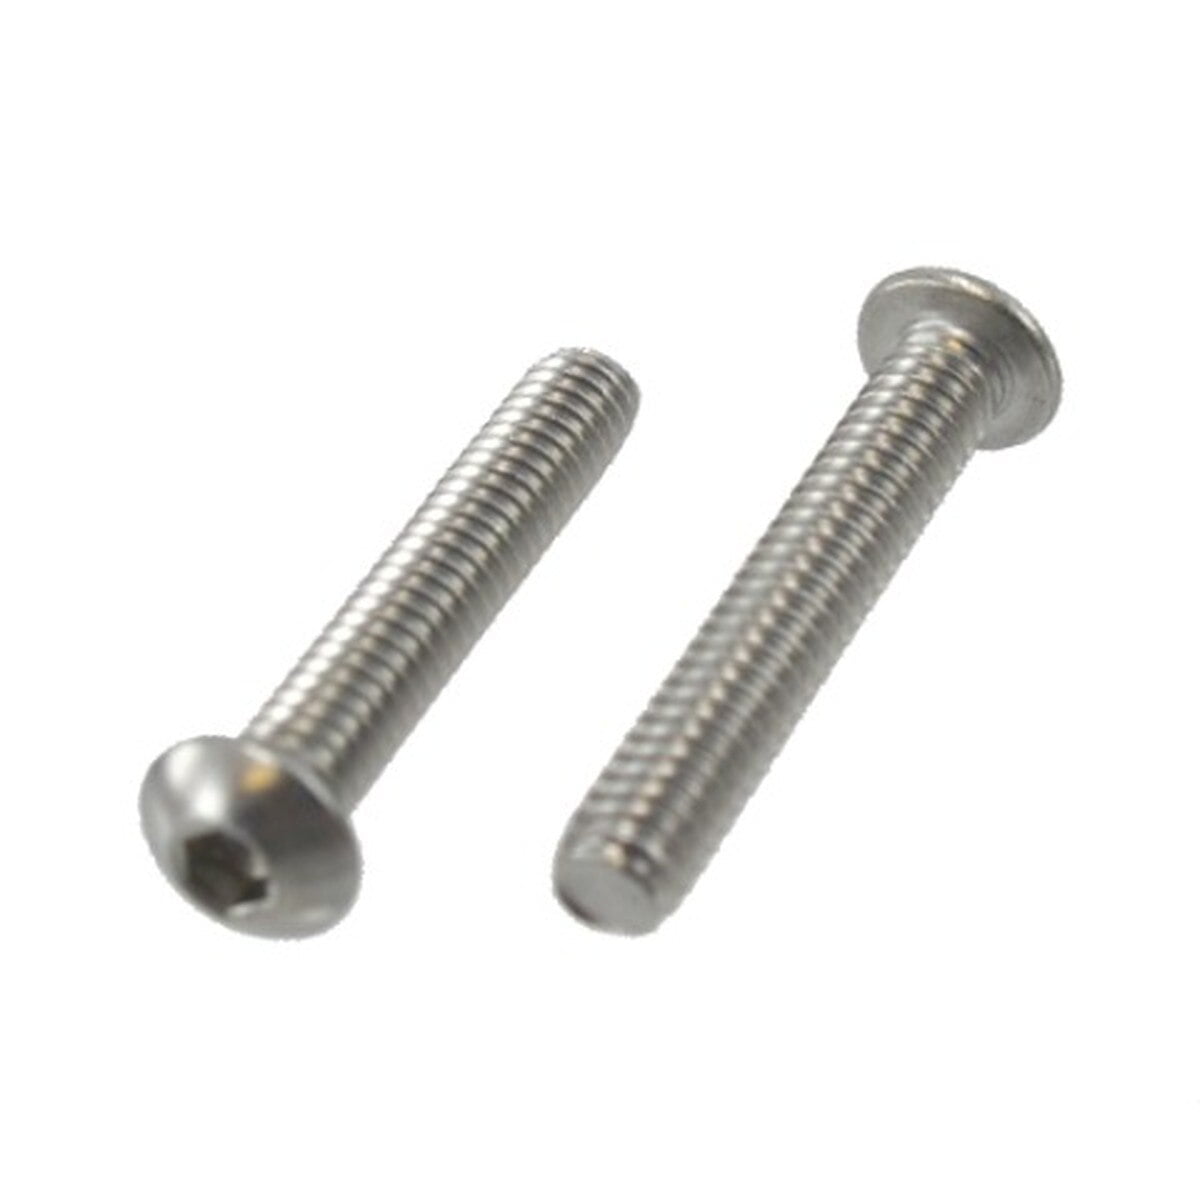 100 each Stainless Steel Button Head Socket Cap Screw 8-32 x 3/4 